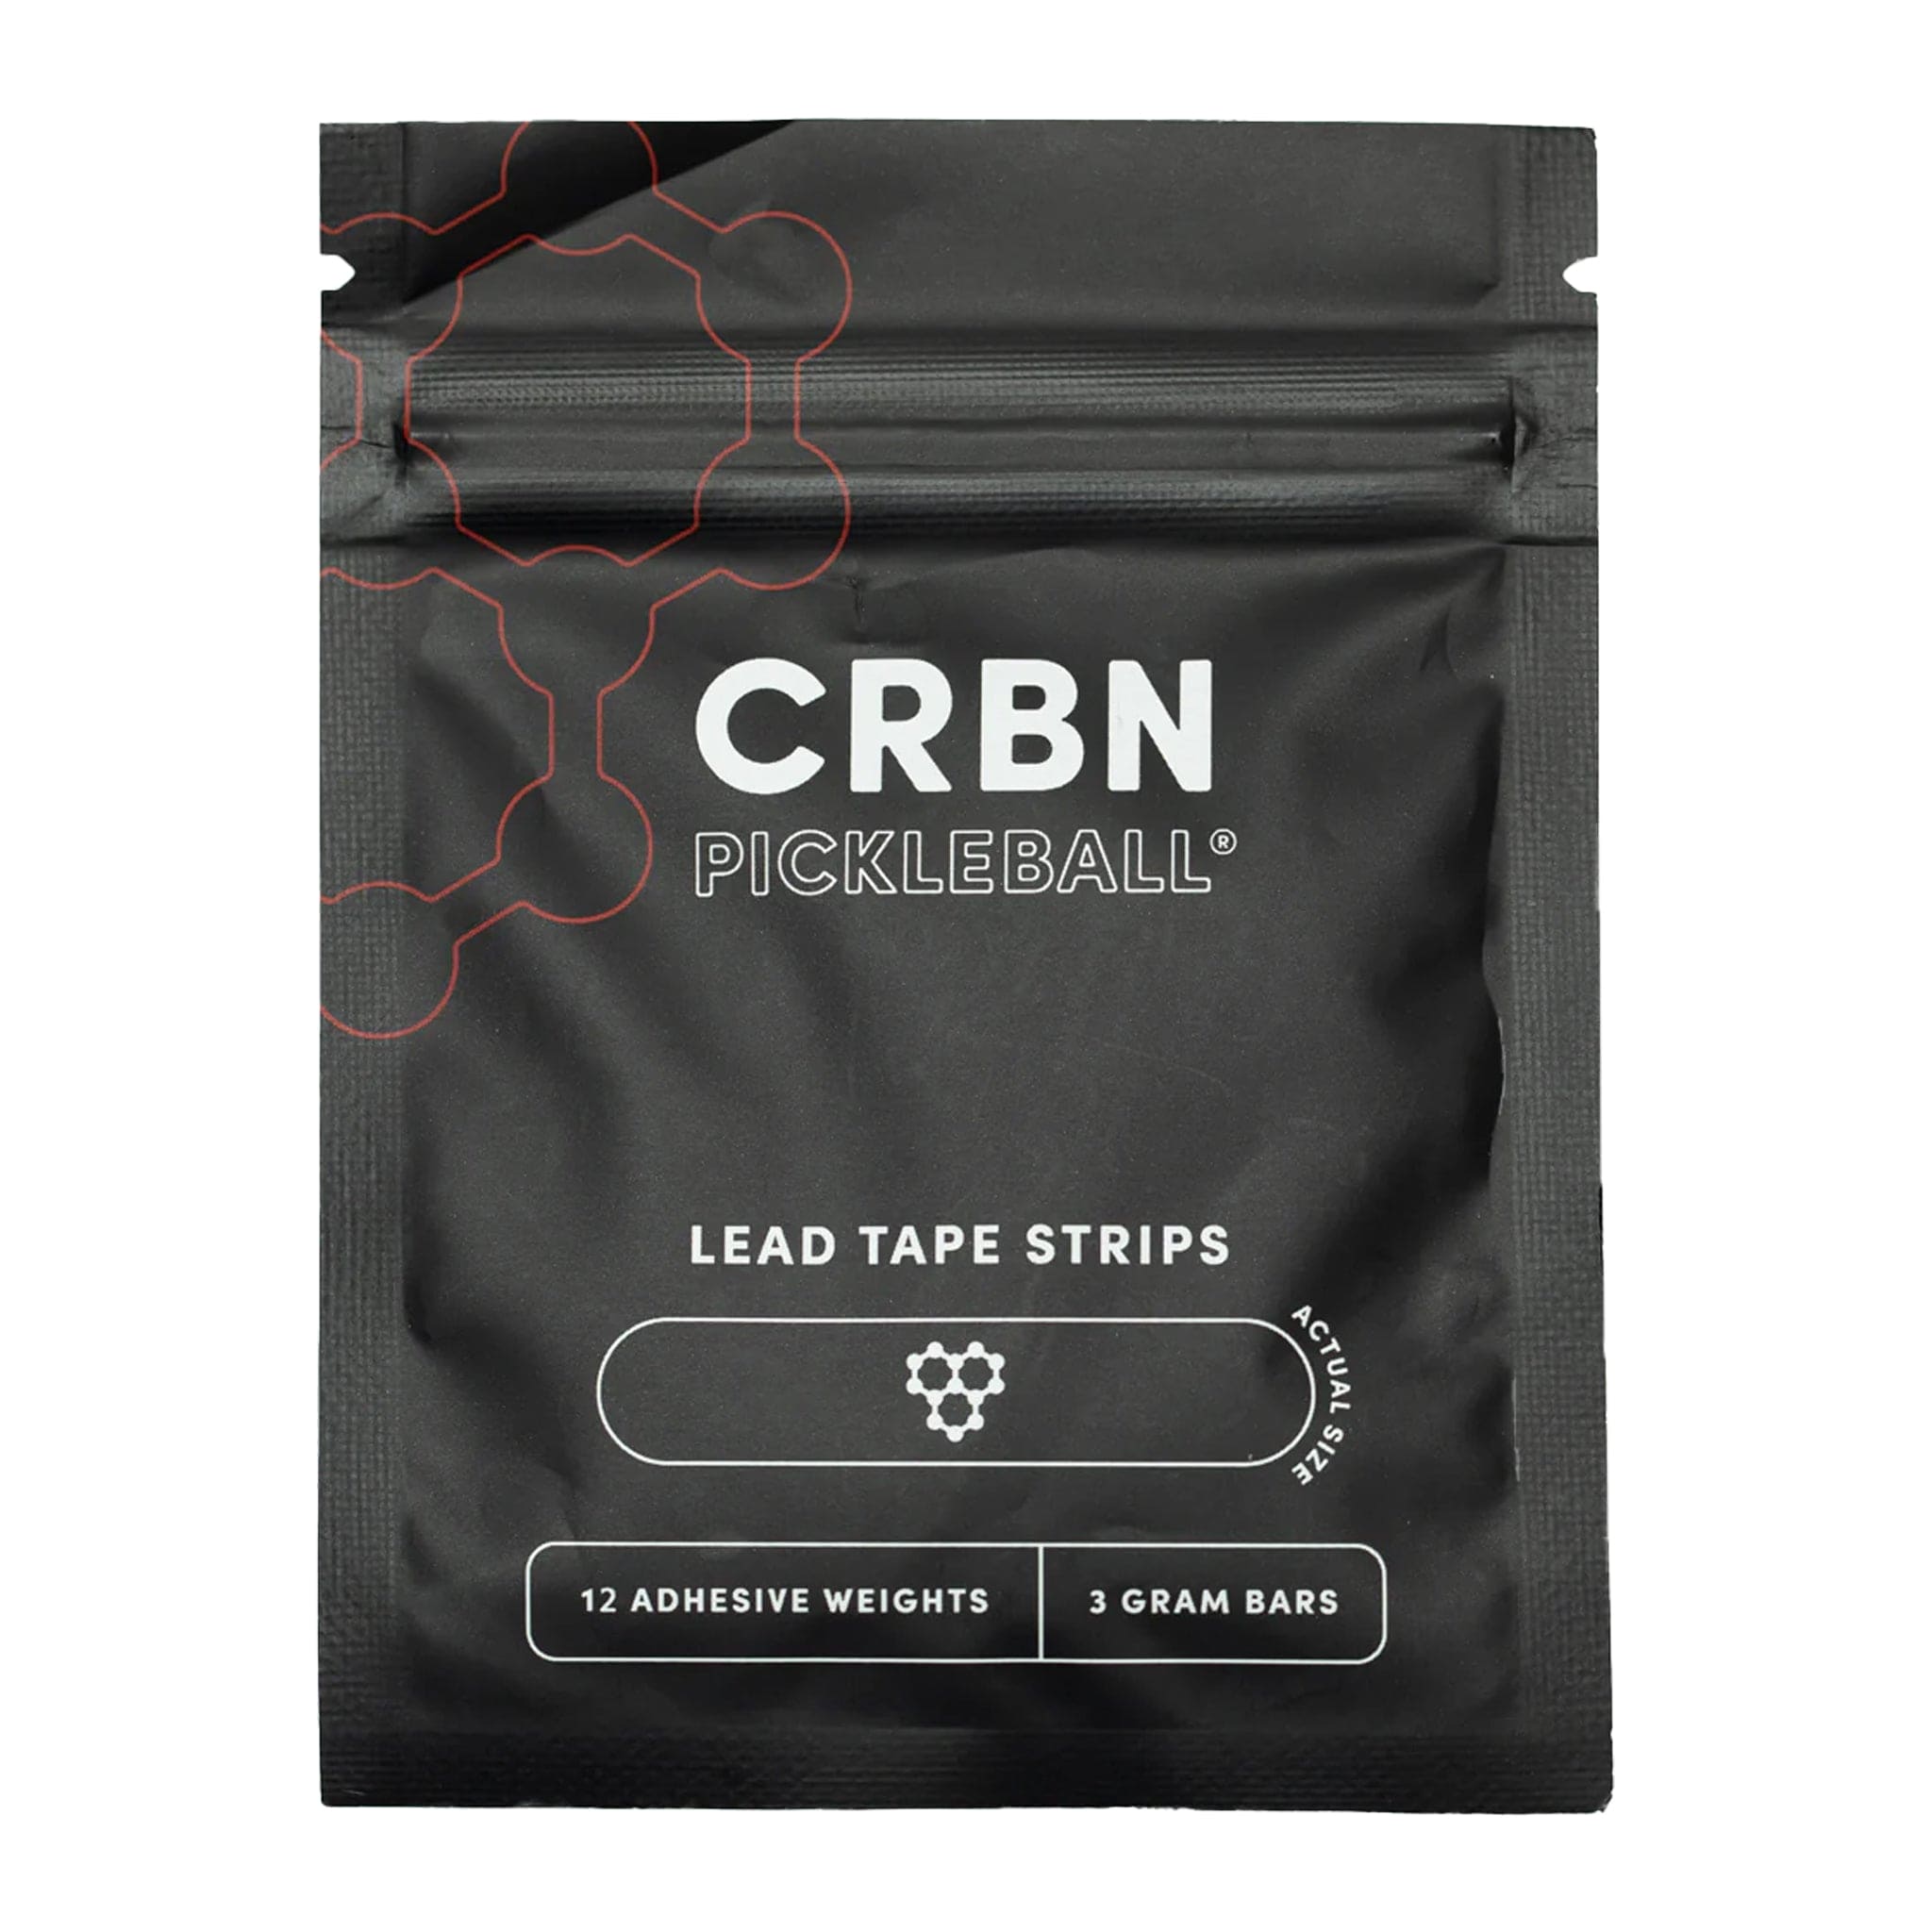 CRBN Lead Tape Strips Pickleball